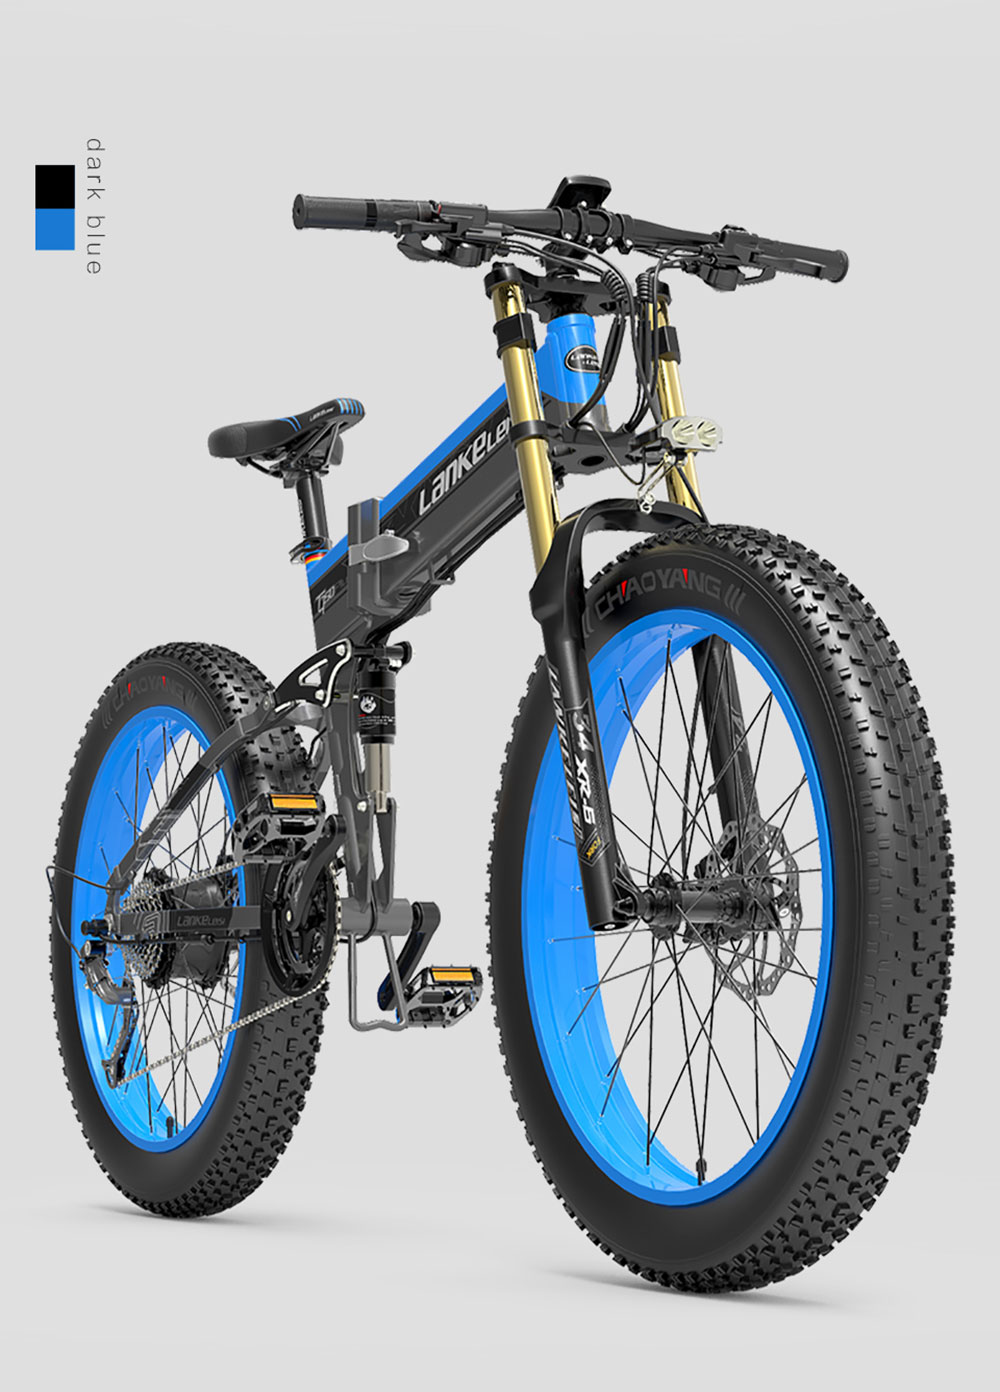 LANKELEISI T750 Plus Big Fork Electric Bike 48V 1000W Motor 14.5Ah Battery 26*4.0'' Fat Tire - Yellow